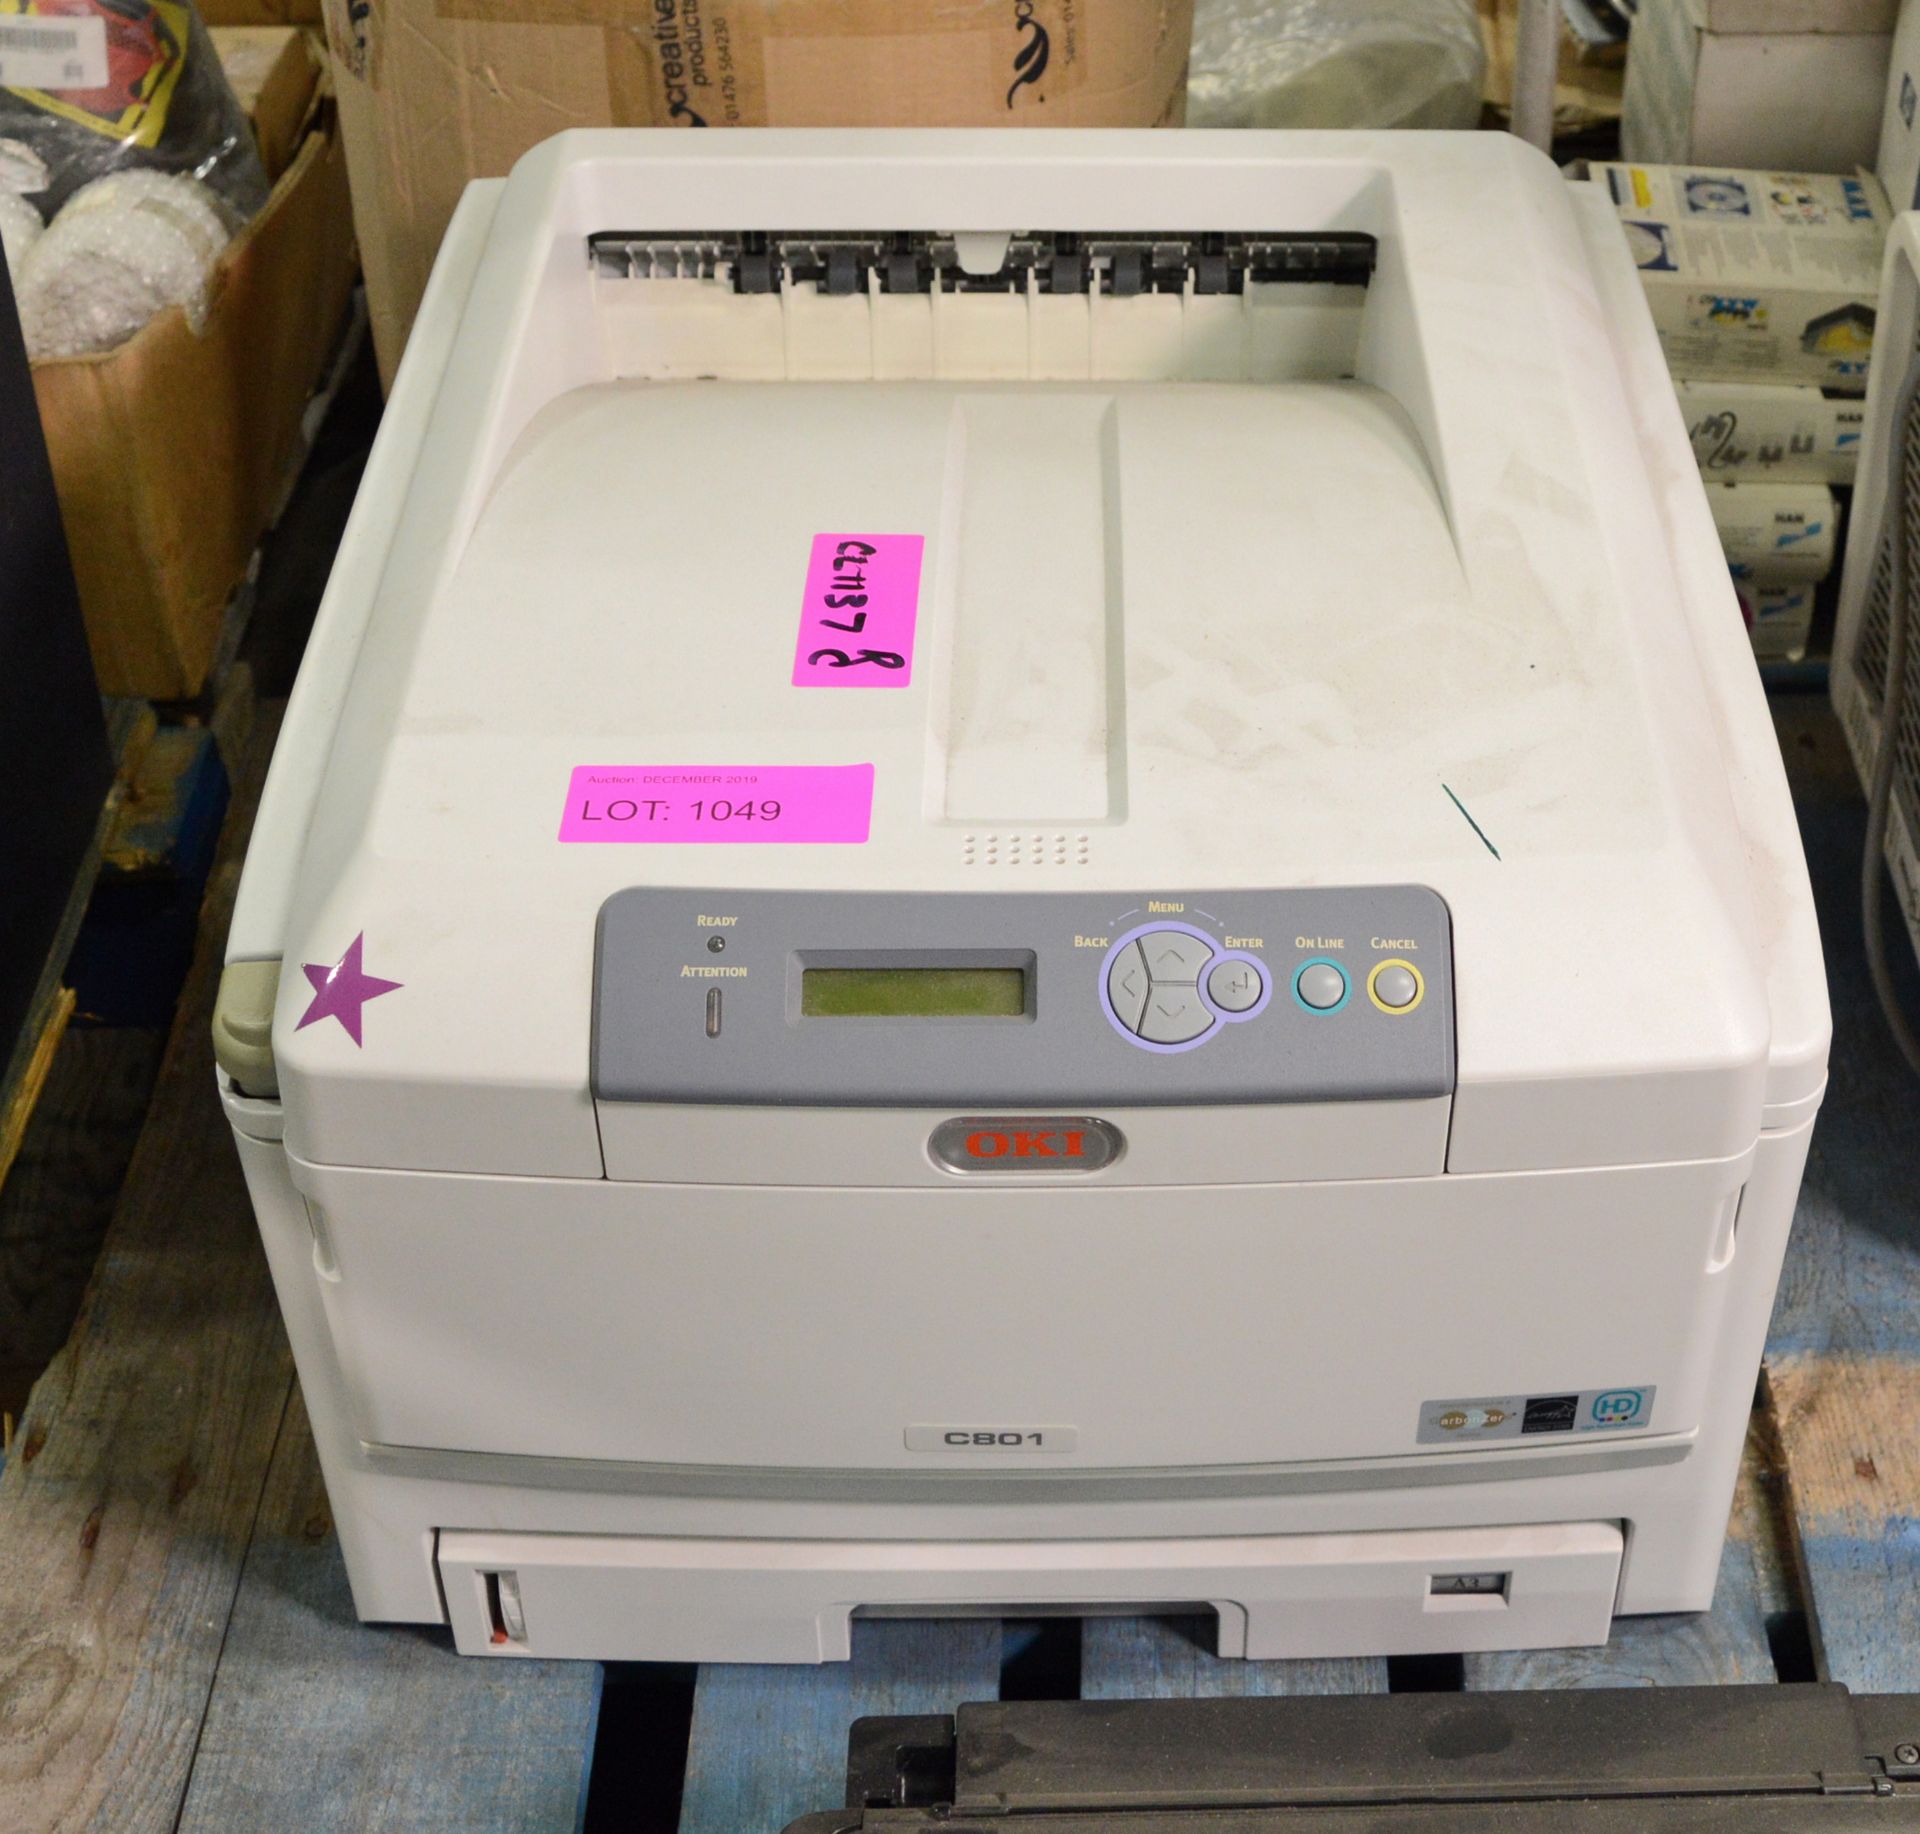 OKI C801 Printer.